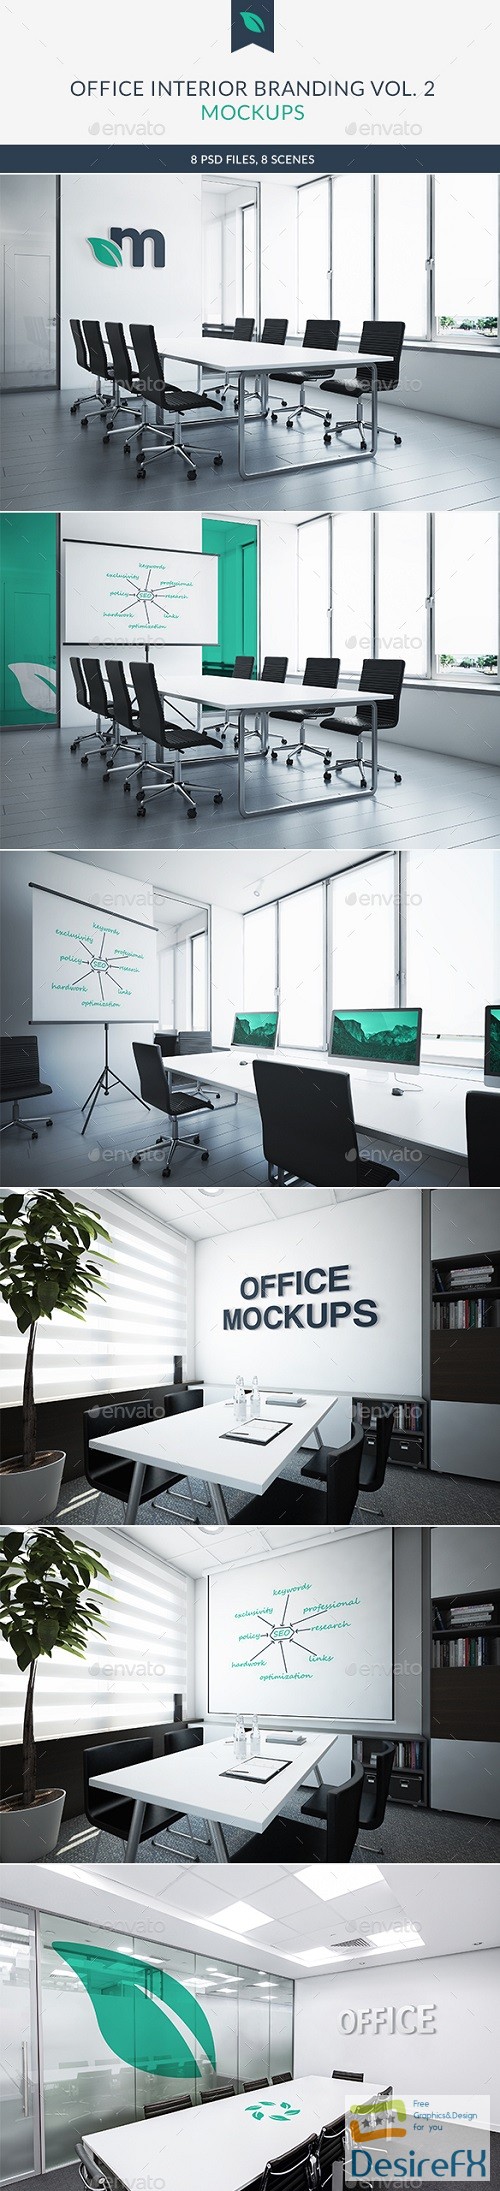 Download Download Office Interior Branding Mockups Vol2 21486903 ...